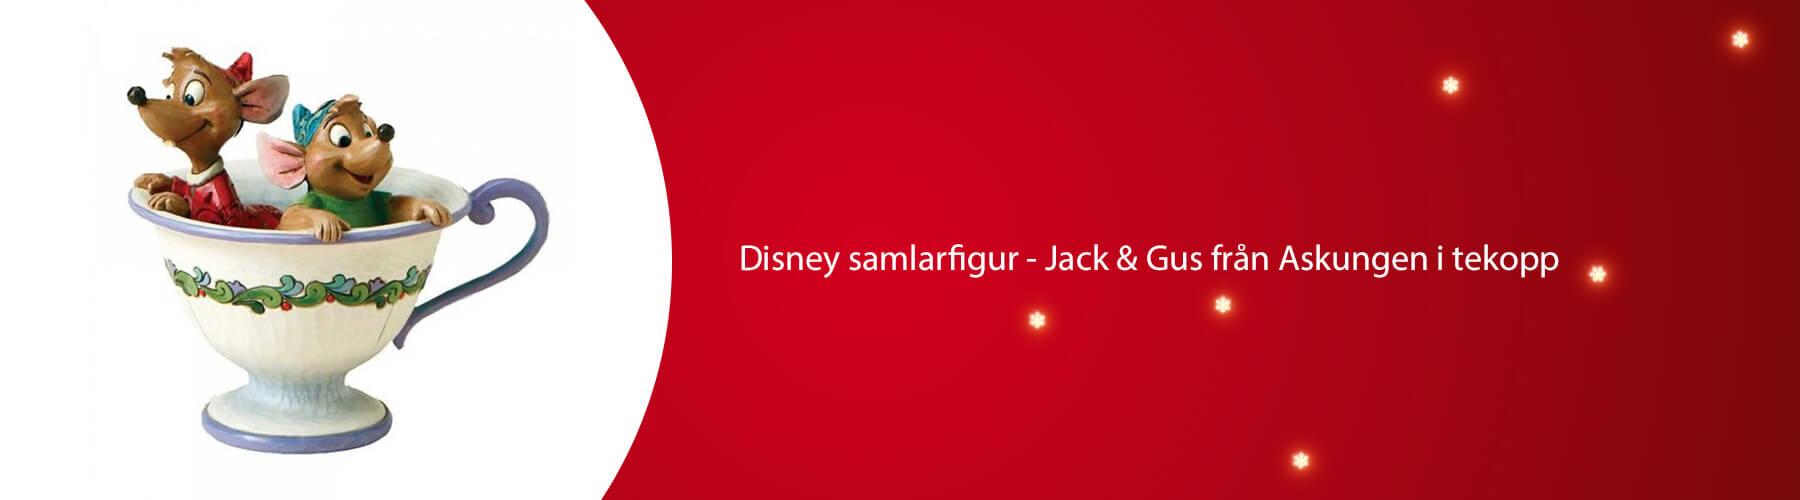 Disney samlarfigur Jack & Gus frÃ¥n Askungen i tekopp